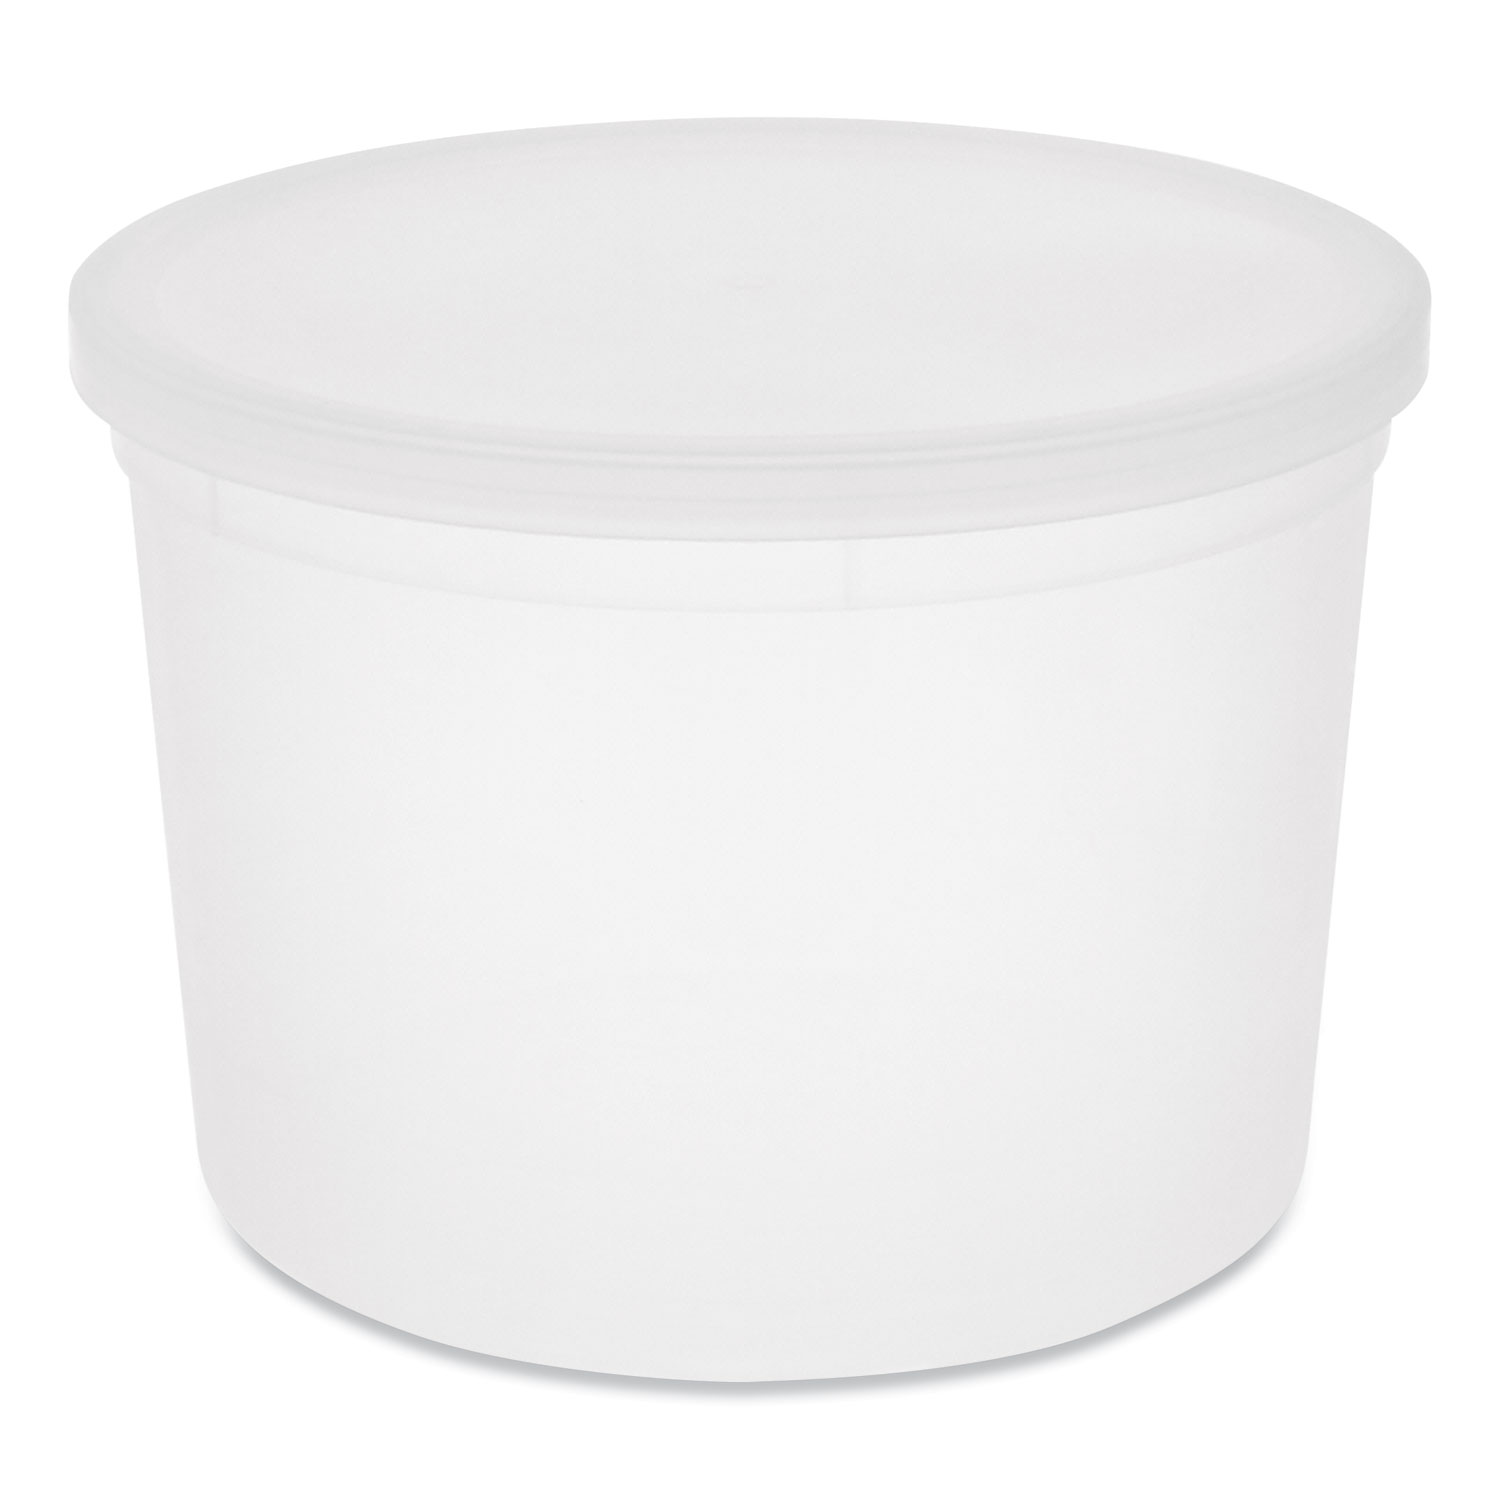 Pactiv DELItainer Microwavable Container Bulk, Natural, 64 oz, 4.5 x 4.5 x 6.35, 120/Carton